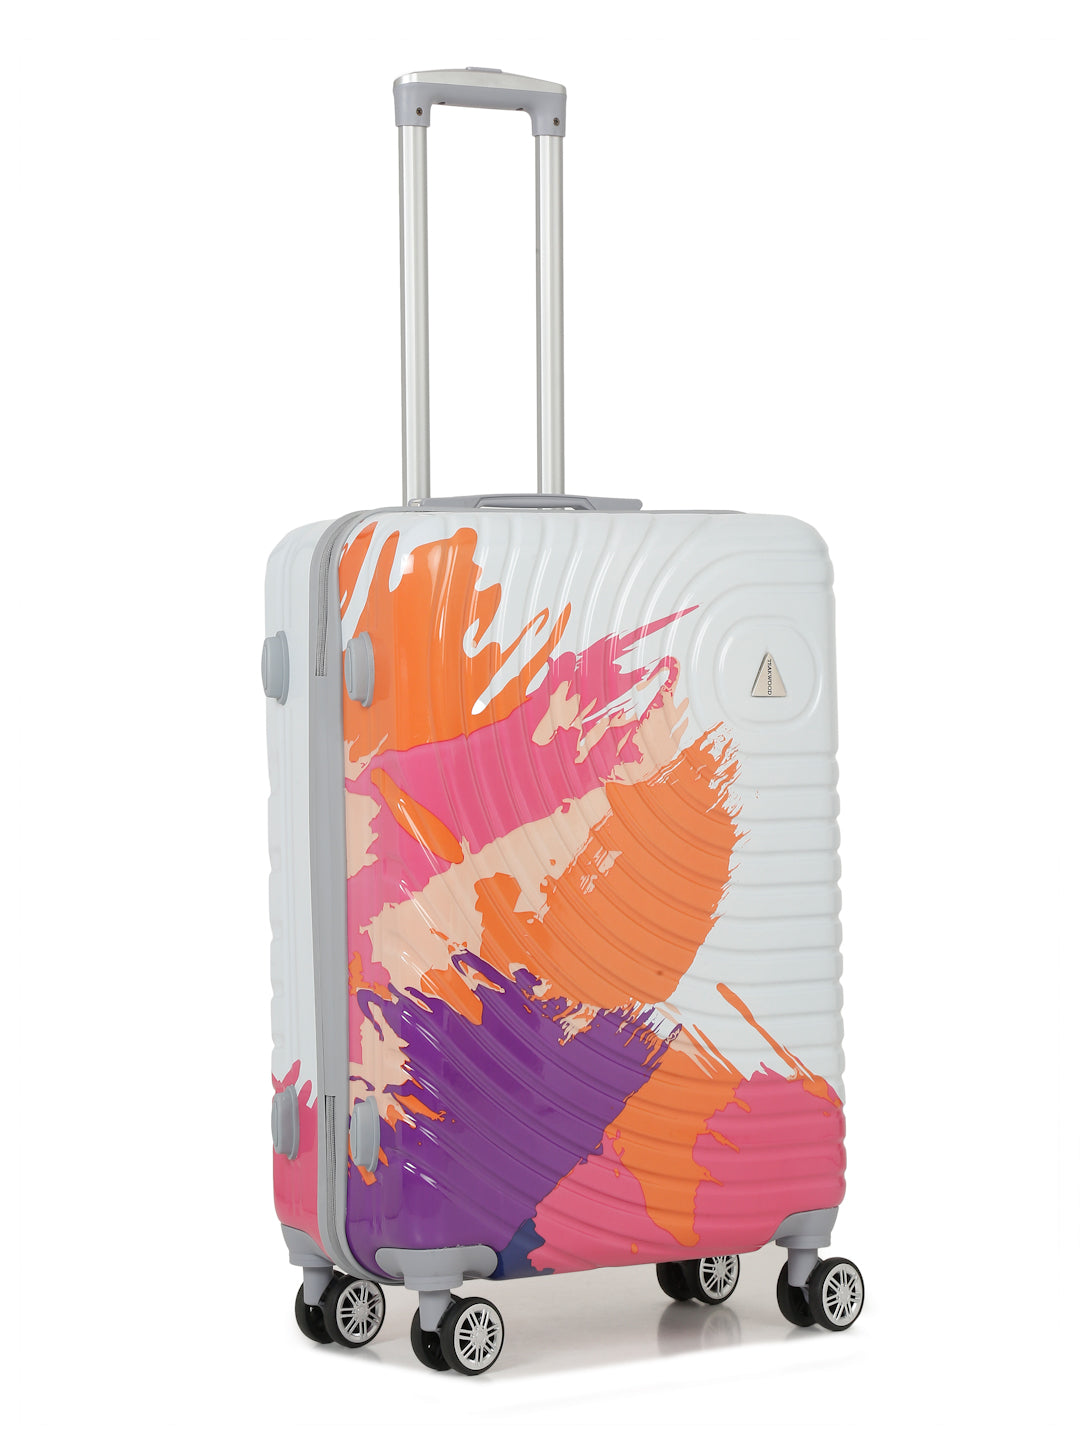 Genie Scarlett Trolley Bag Medium Size, 67 cms Lavender Hard Side Travel Bag,  8 Wheel Luggage Suitcase for Travelling, Scratch Resistant | Dealsmagnet.com